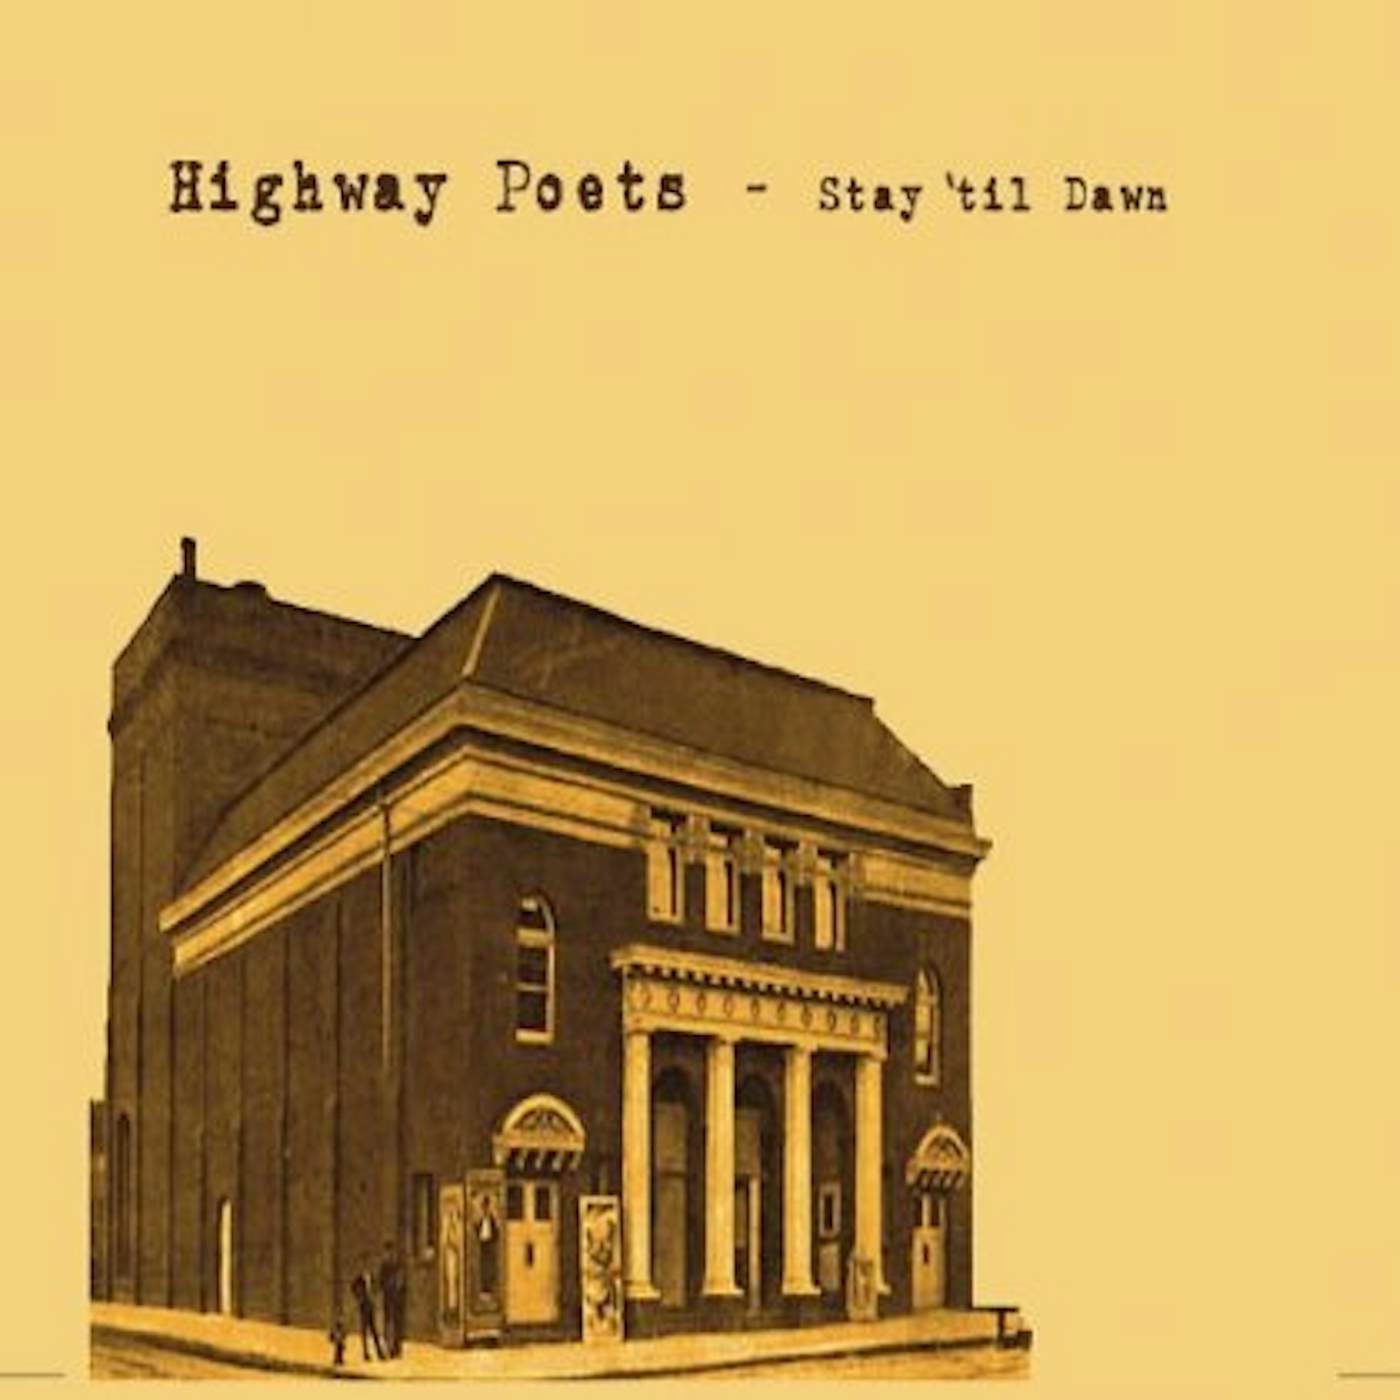 Highway Poets STAY 'TIL DAWN CD